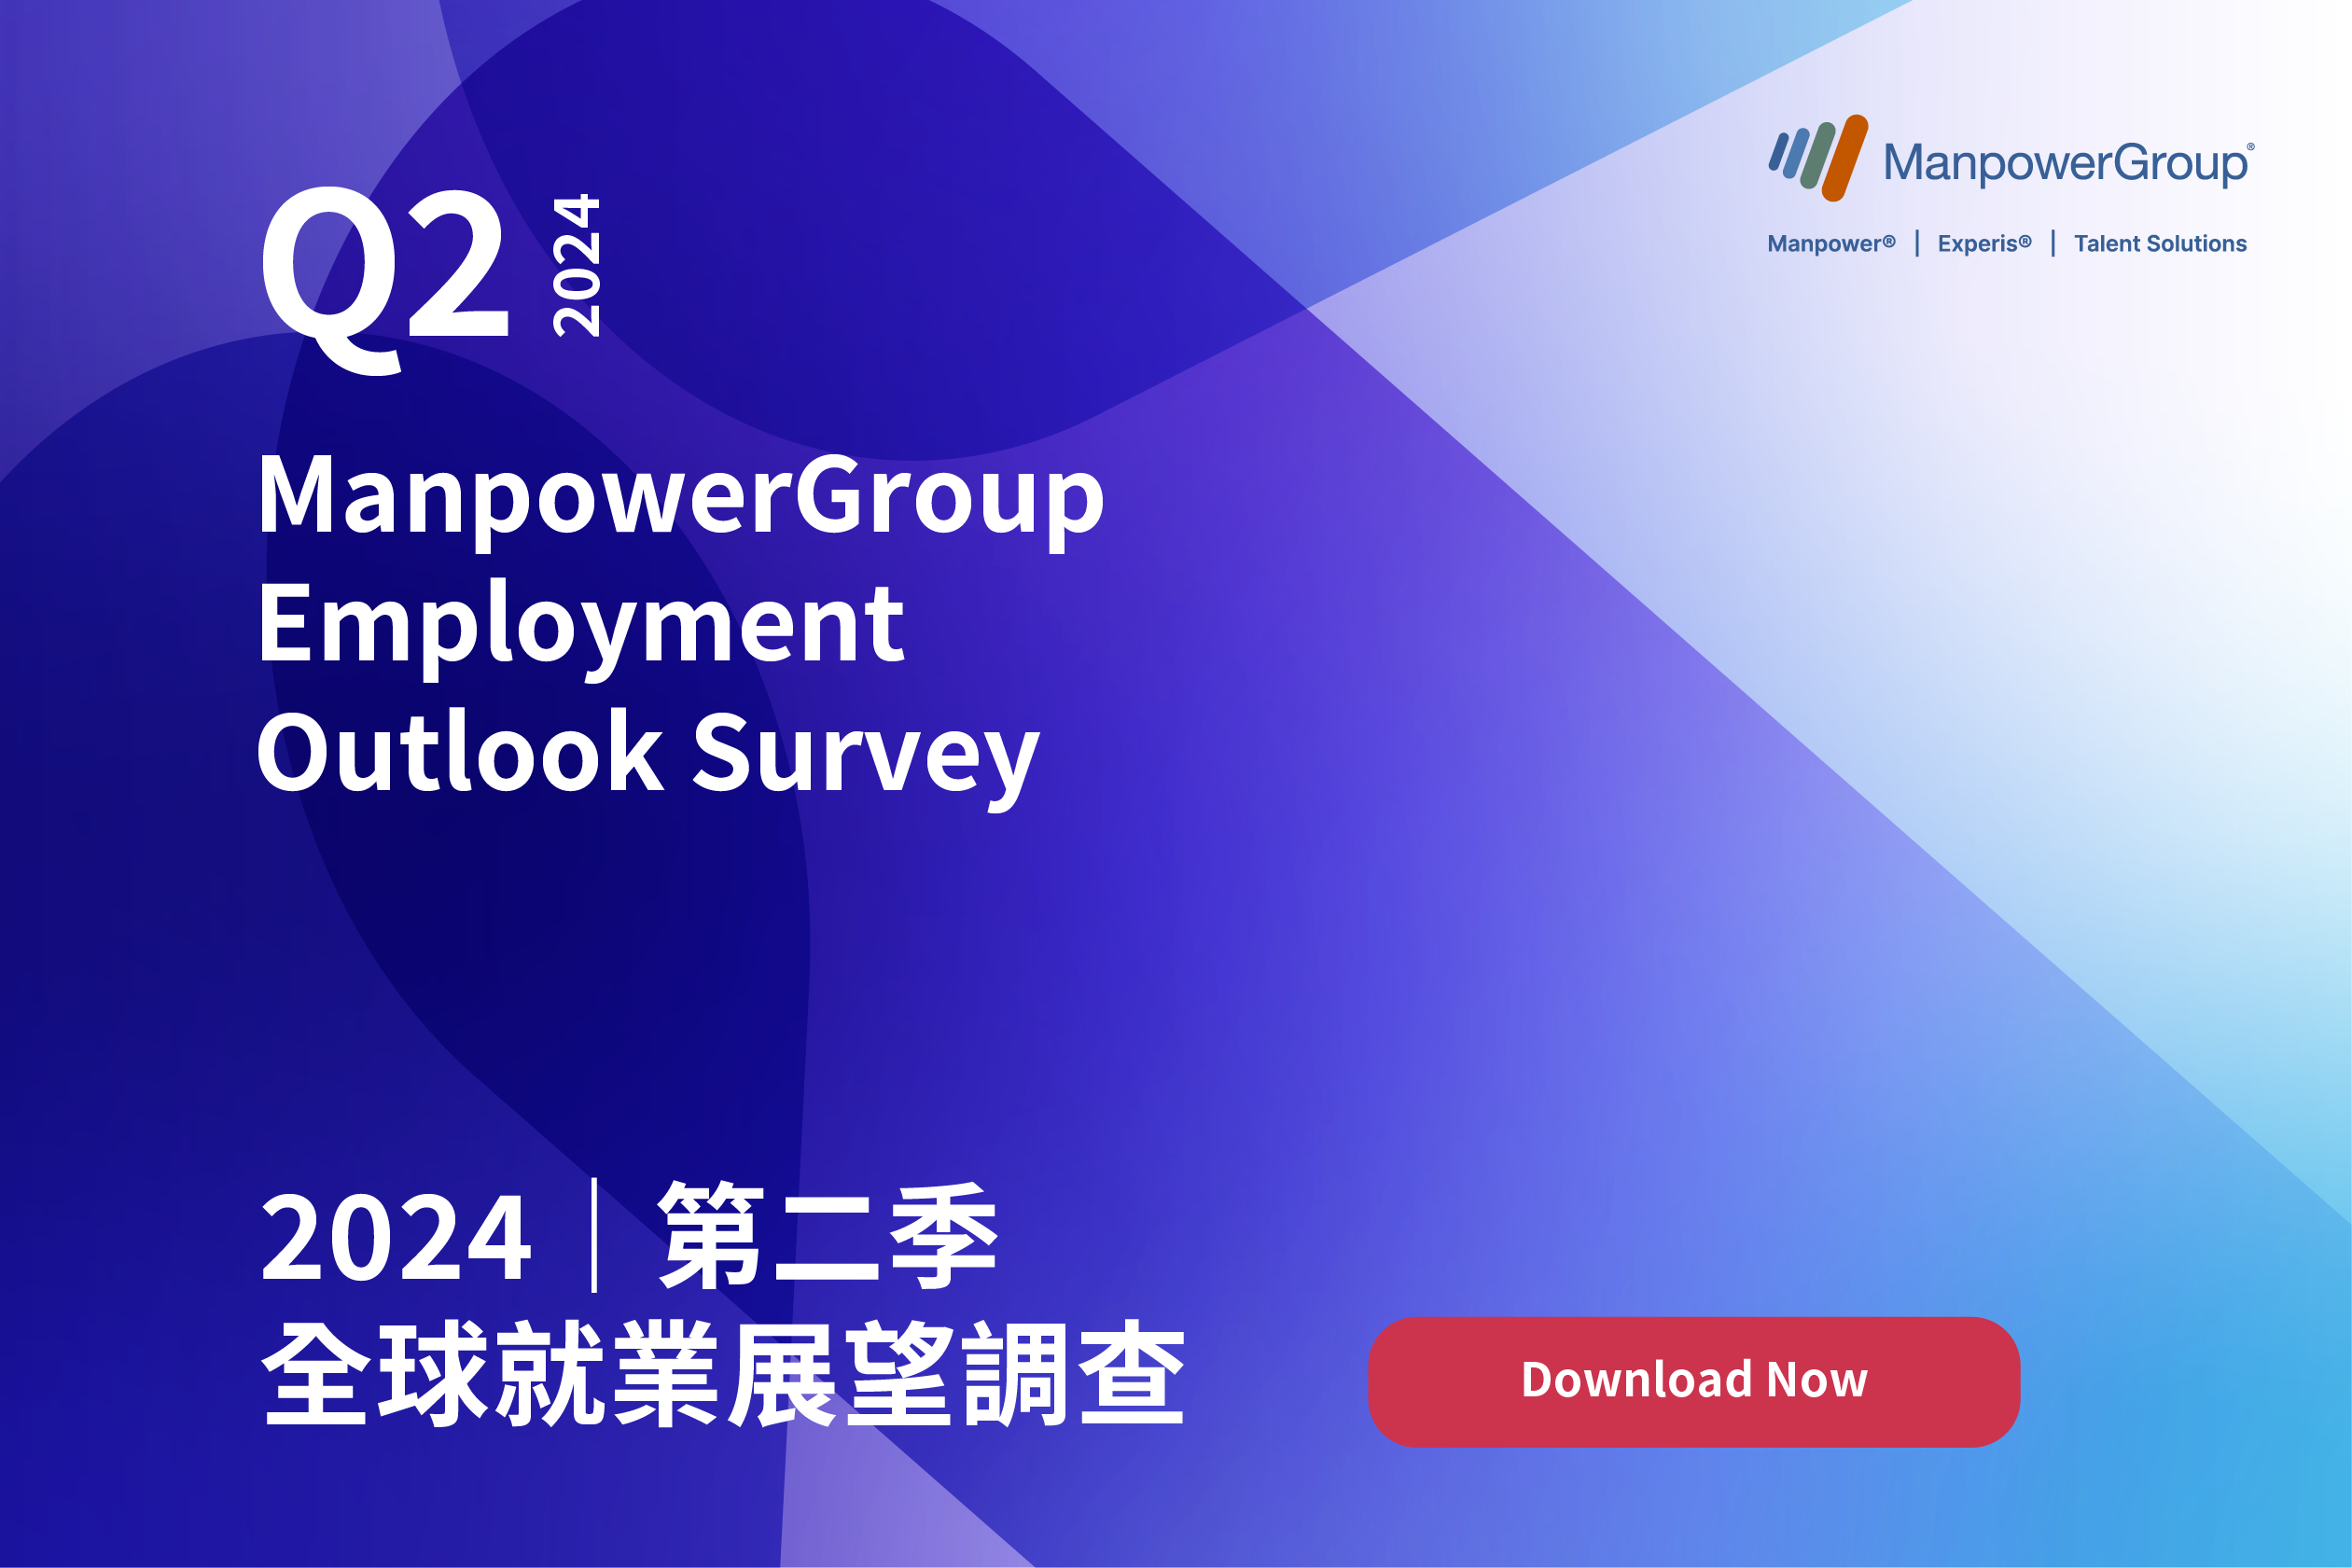 Q224 ManpowerGroup Employment Outlook Survey